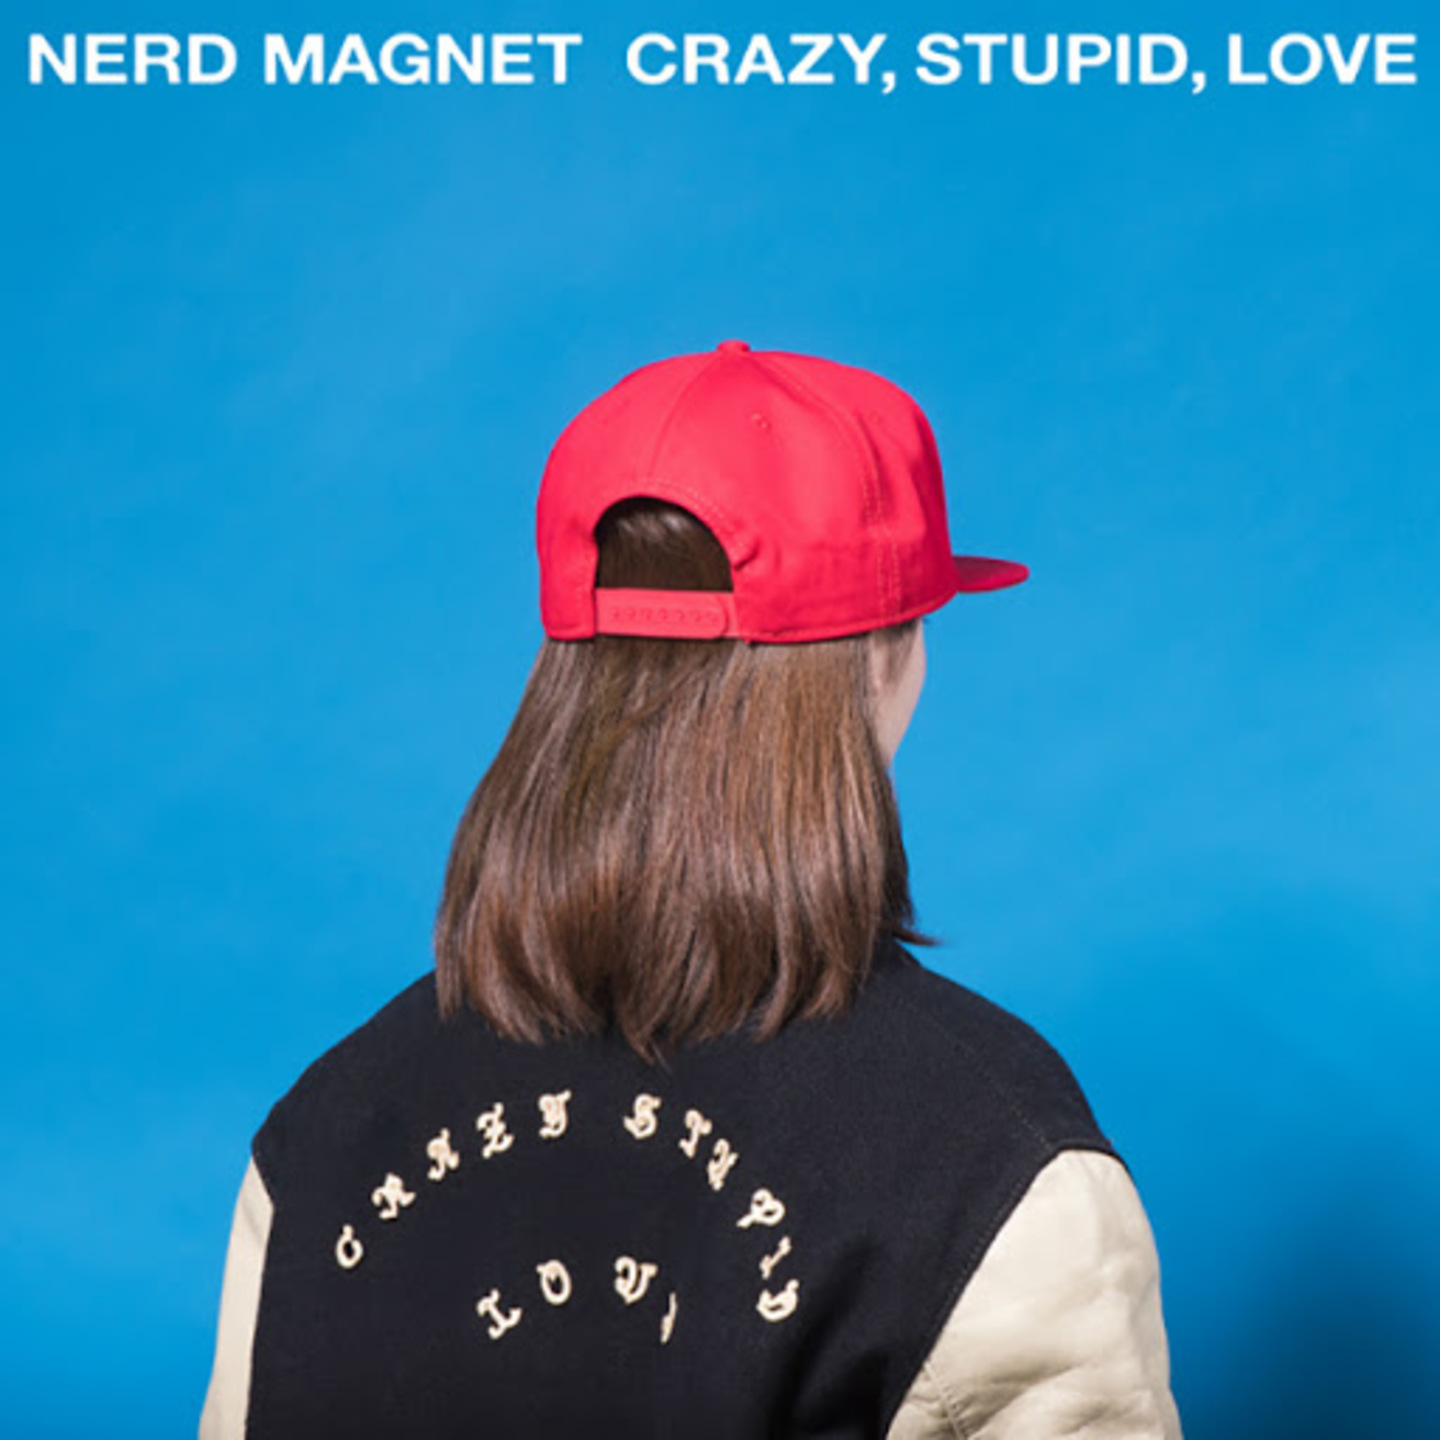 NERD MAGNET - Crazy, Stupid, Love LP